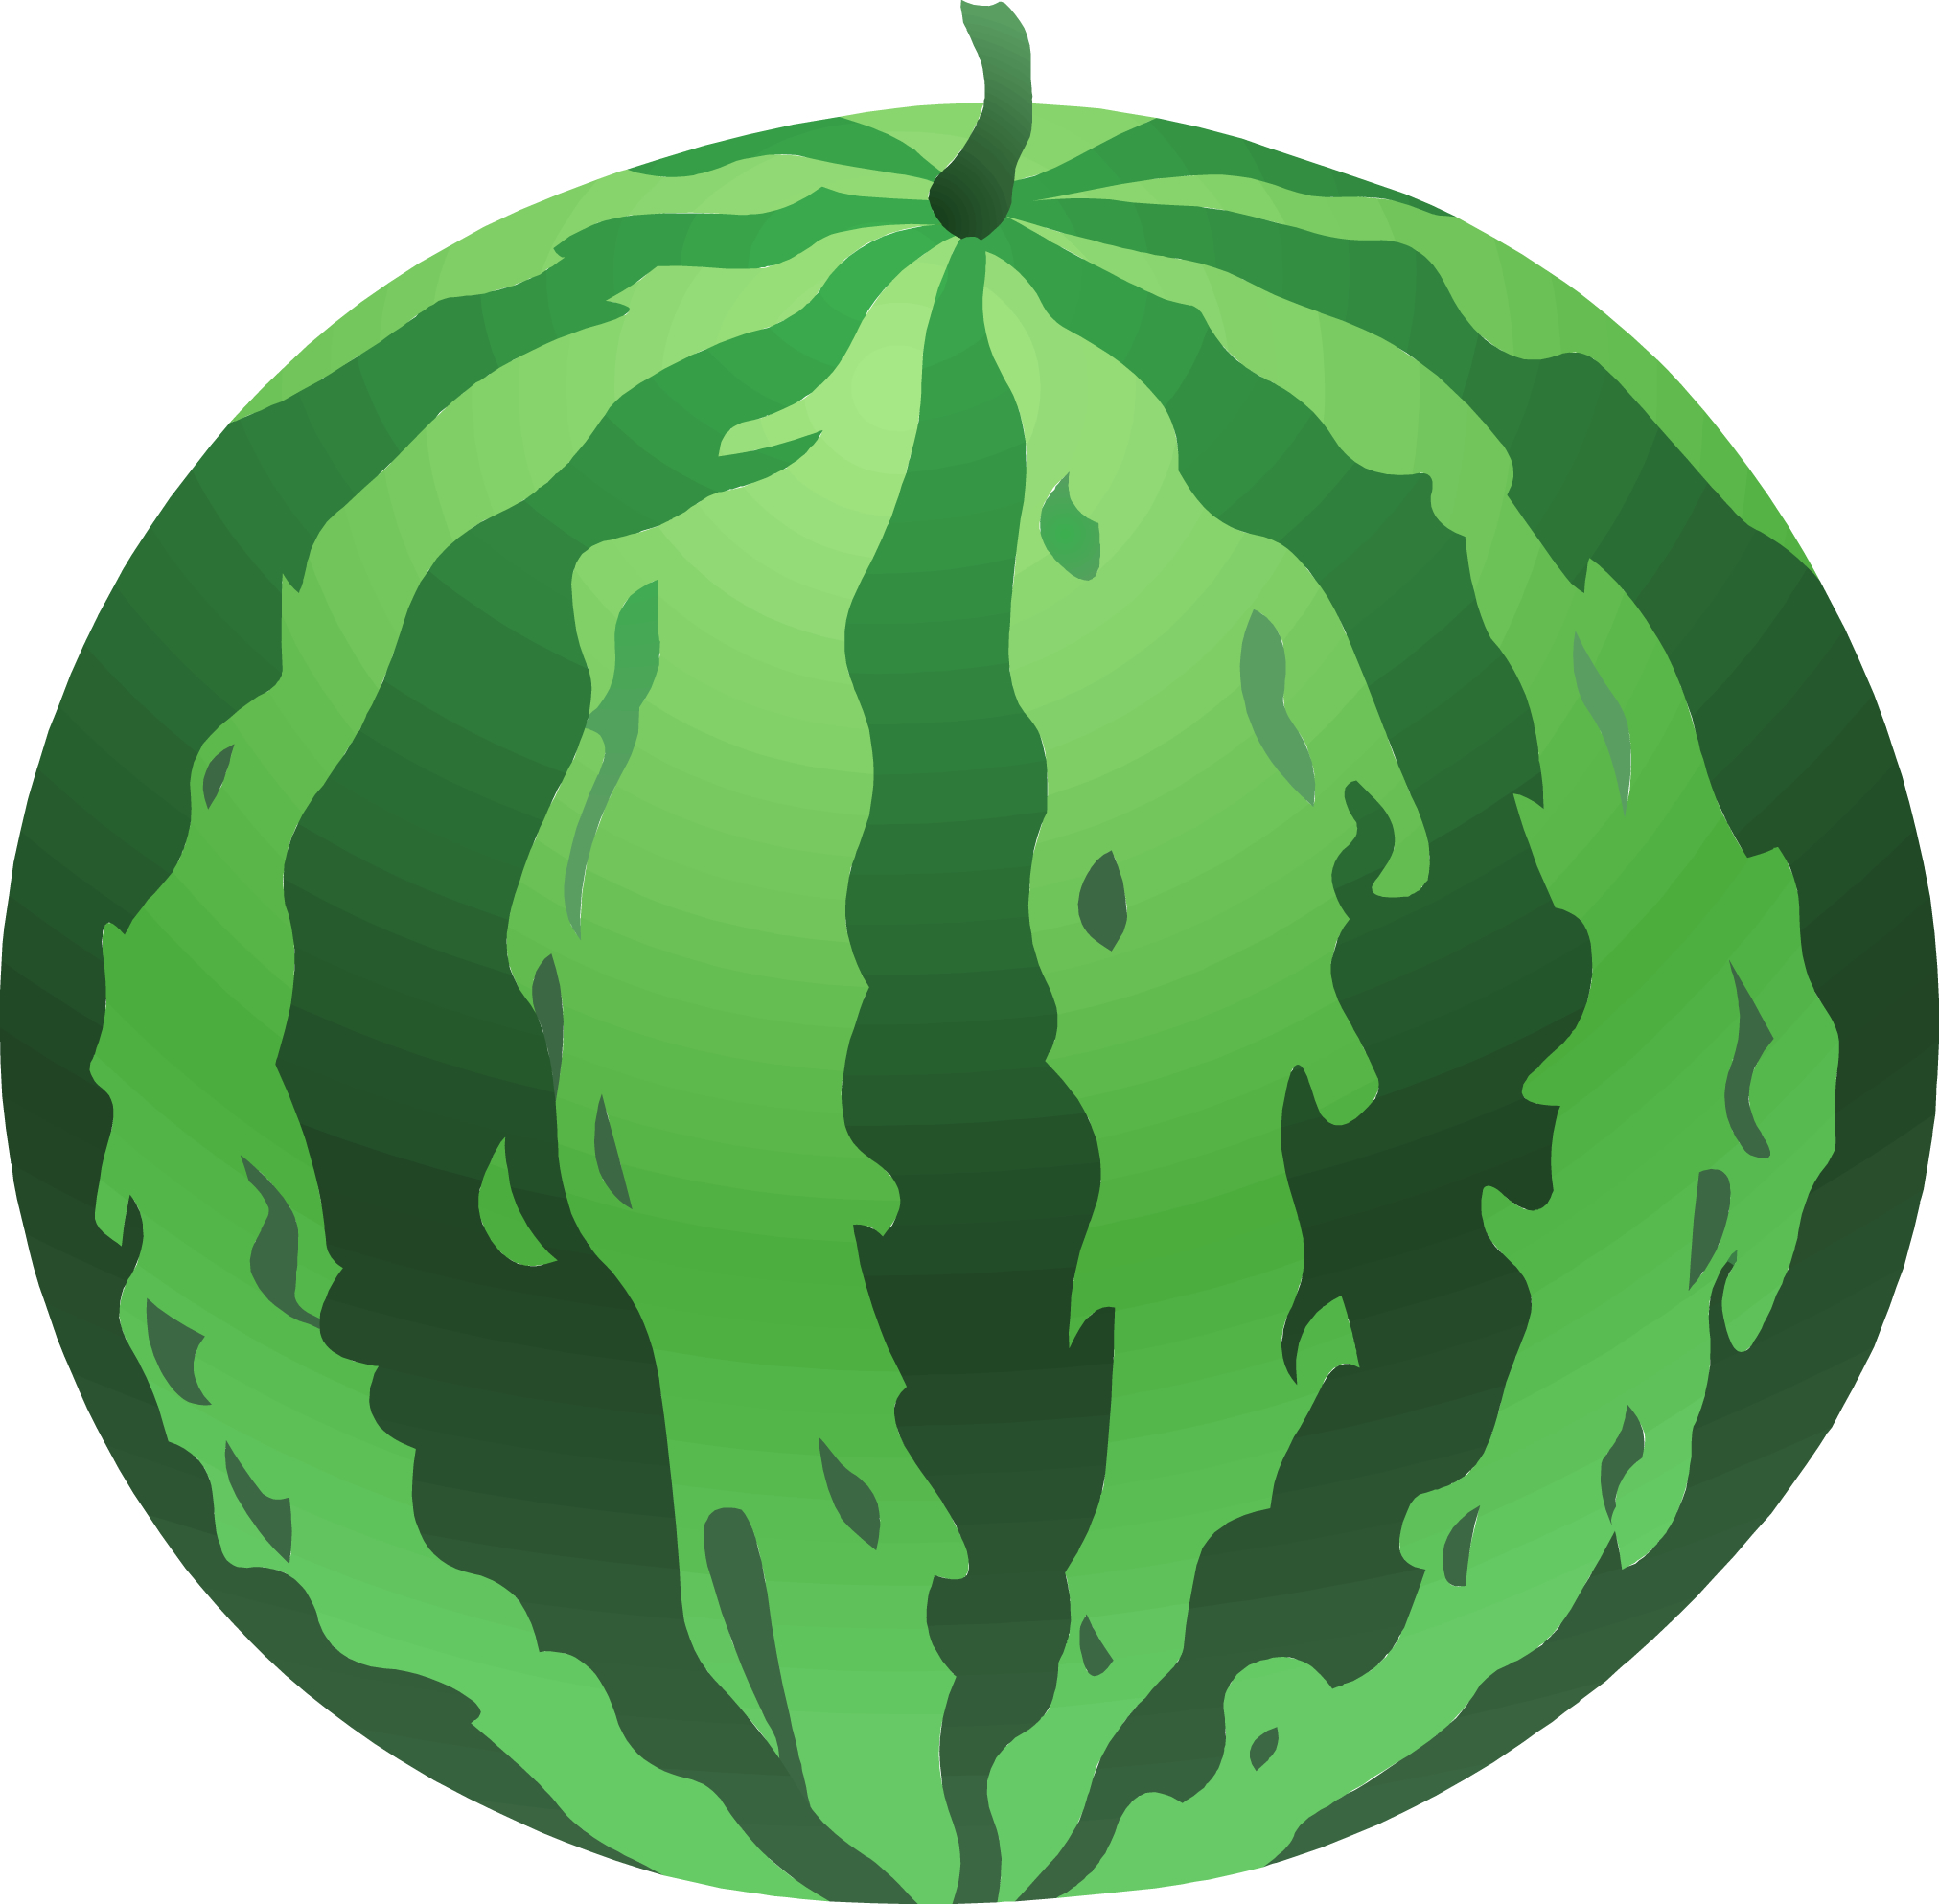 Watermelon clipart image